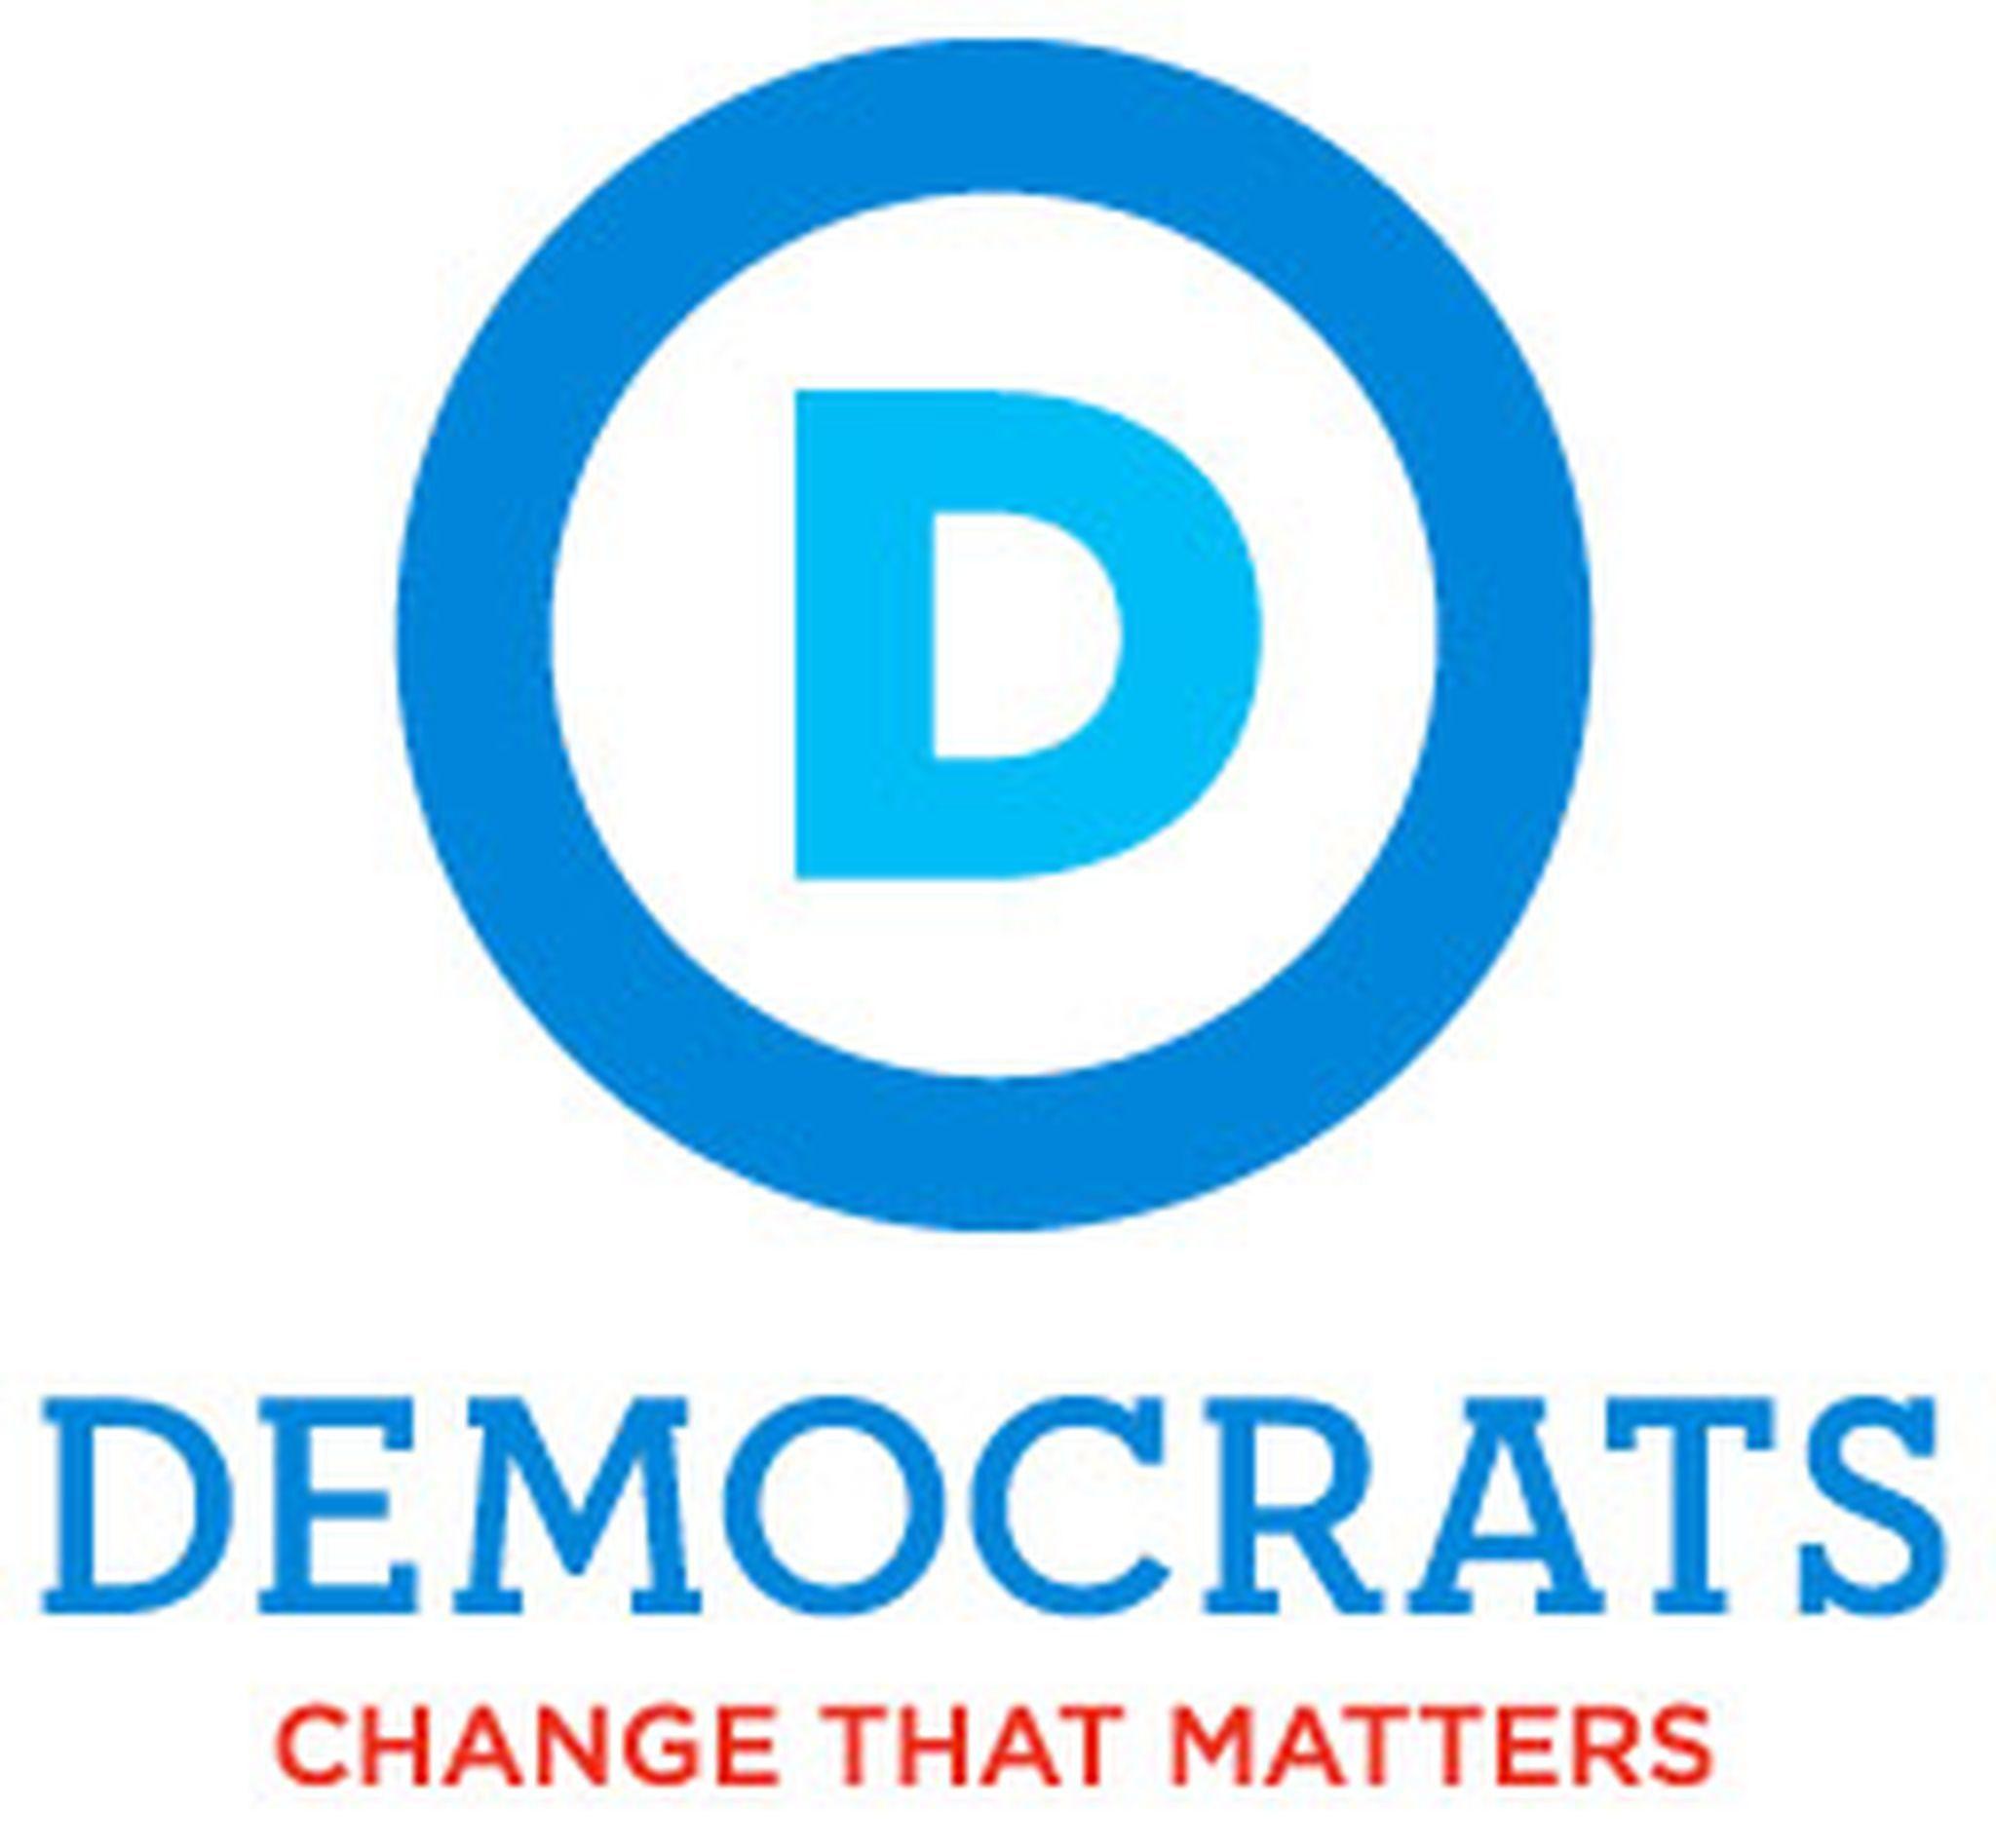 Democrat Logo - EDITORIAL: The Democrats' dim logo - Washington Times